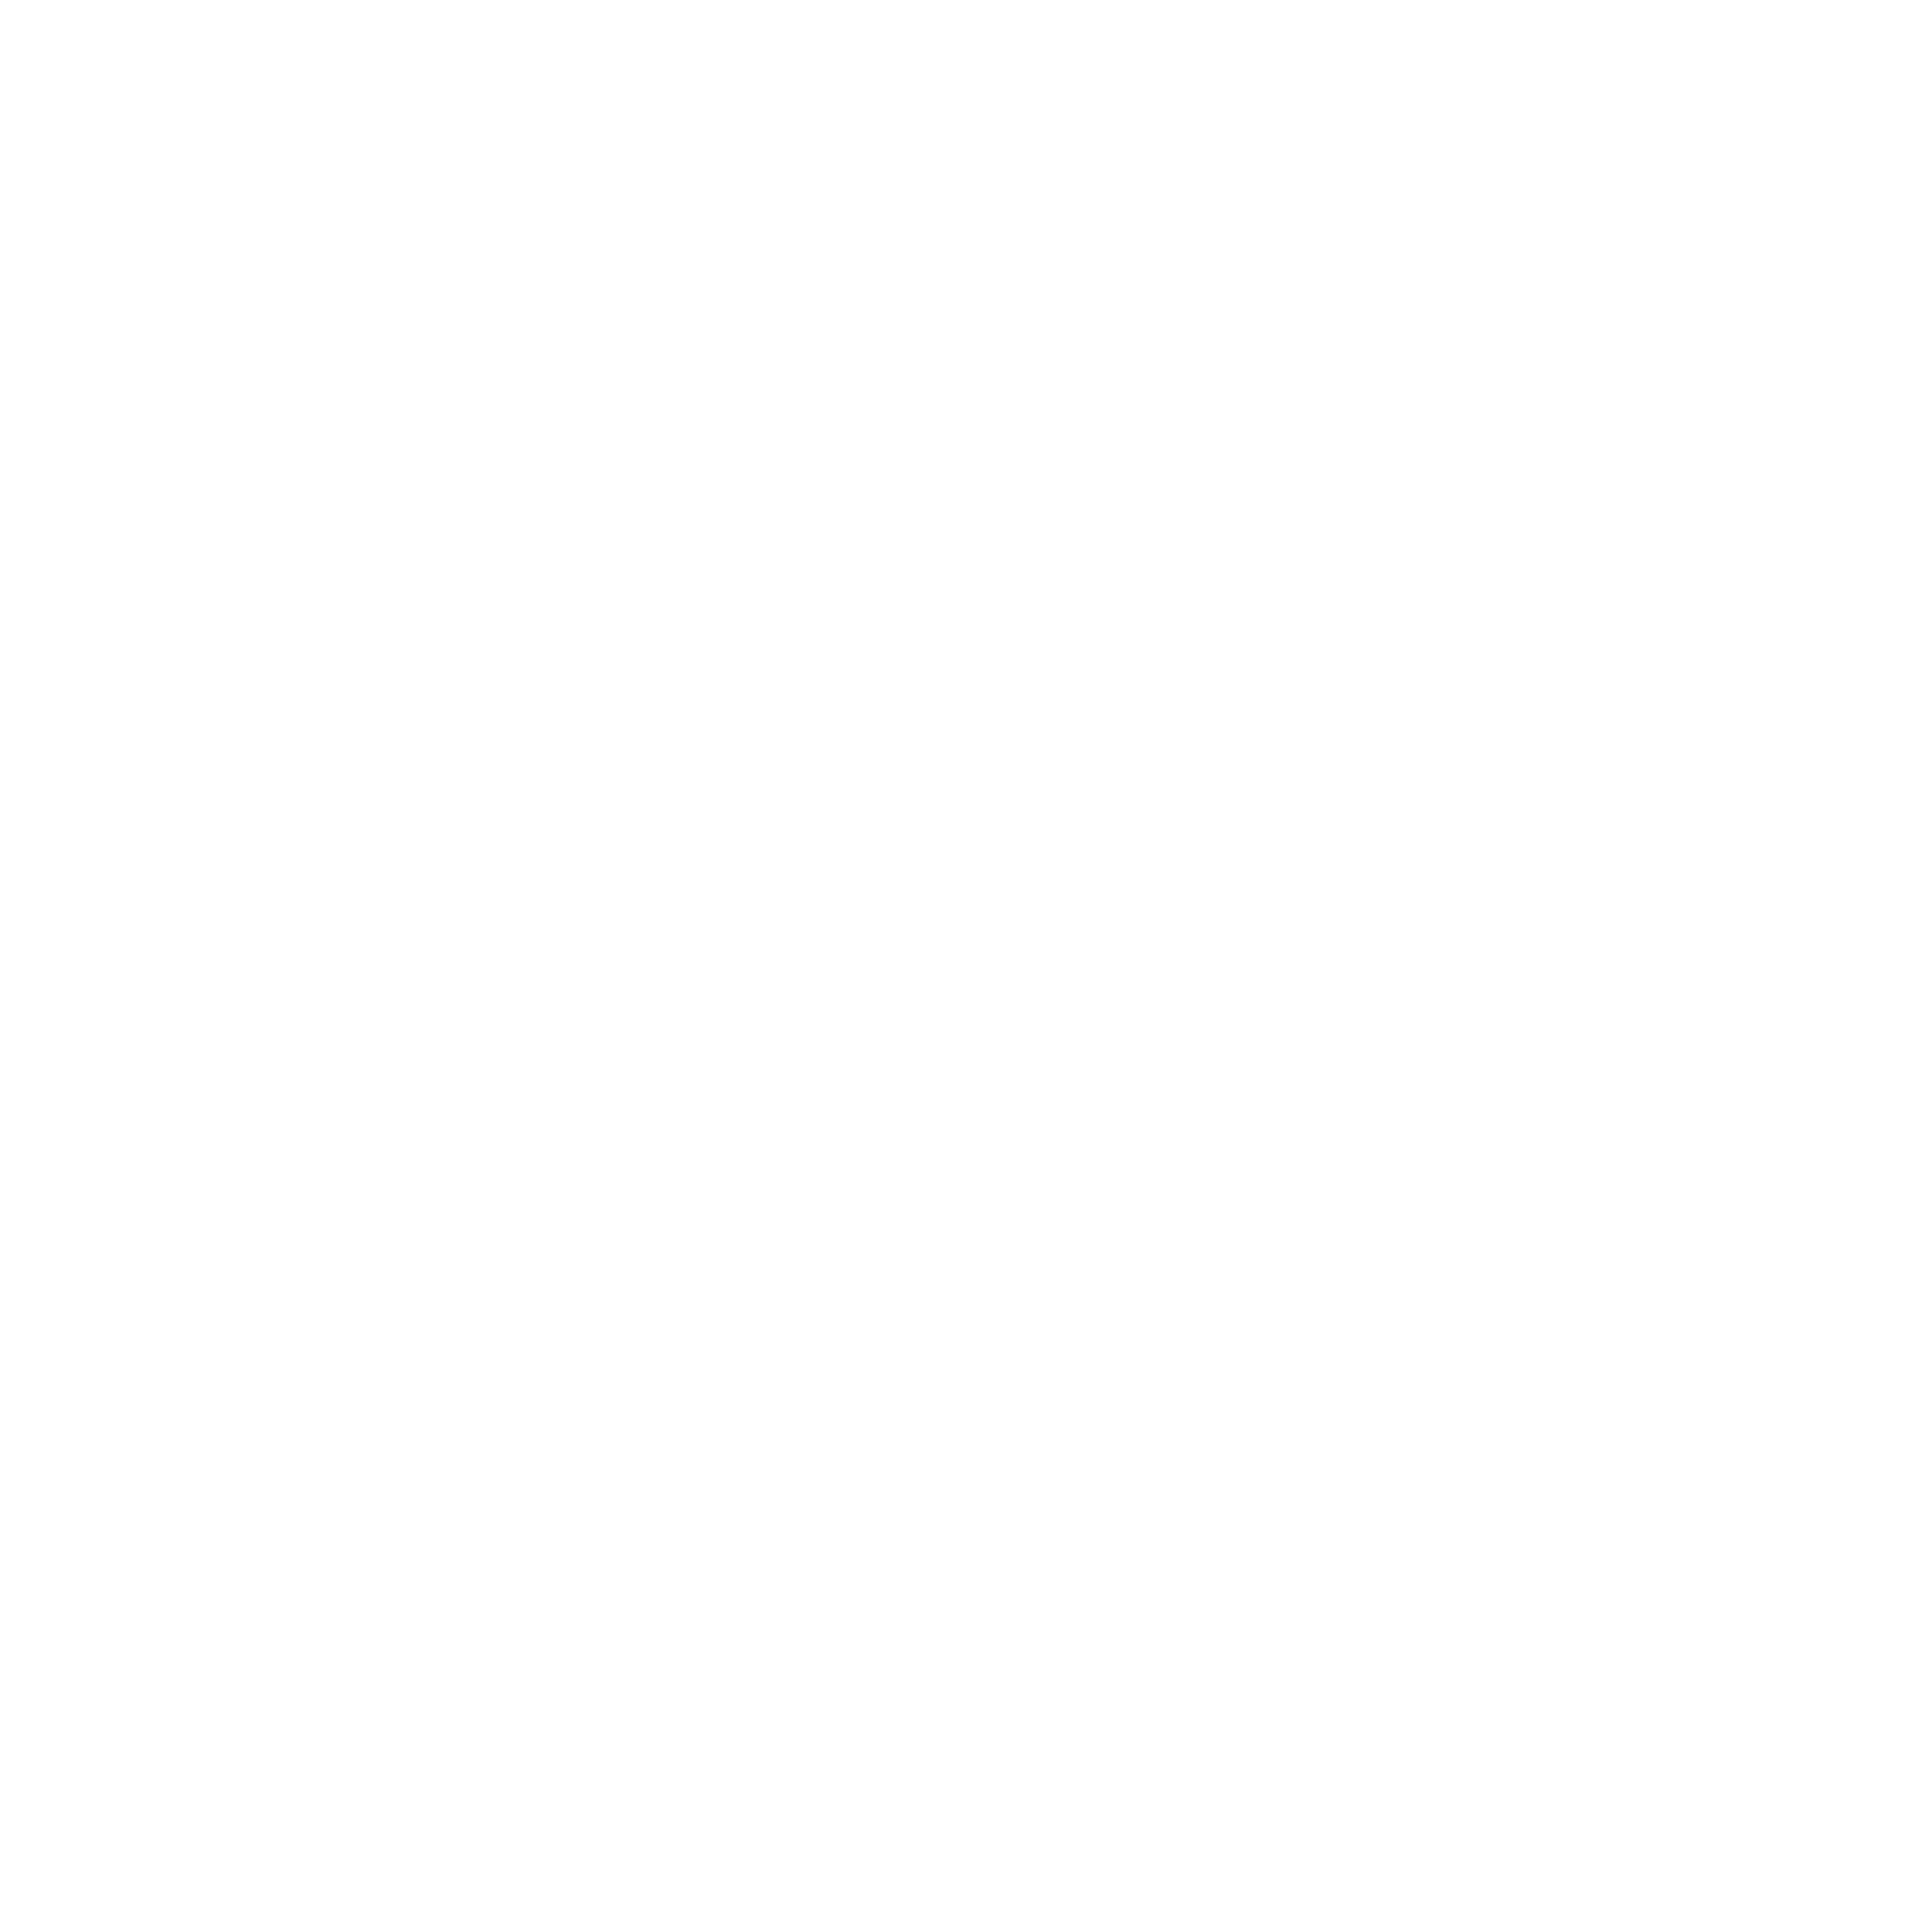 Hart-logos-black-trans13.png